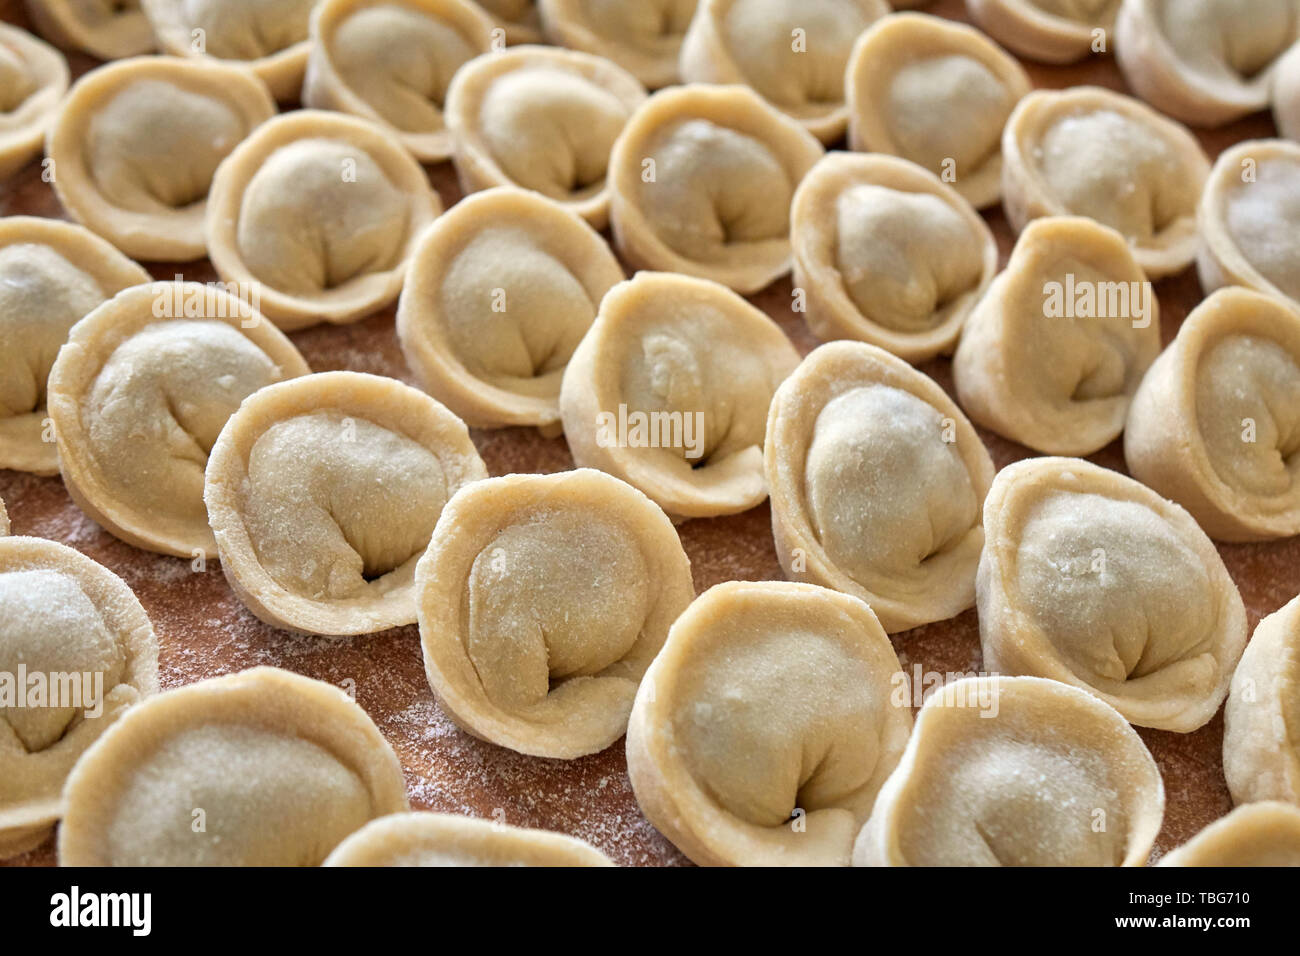 Homemade russian dumplings, pelmeni, covered in flour on the wooden board Stock Photo